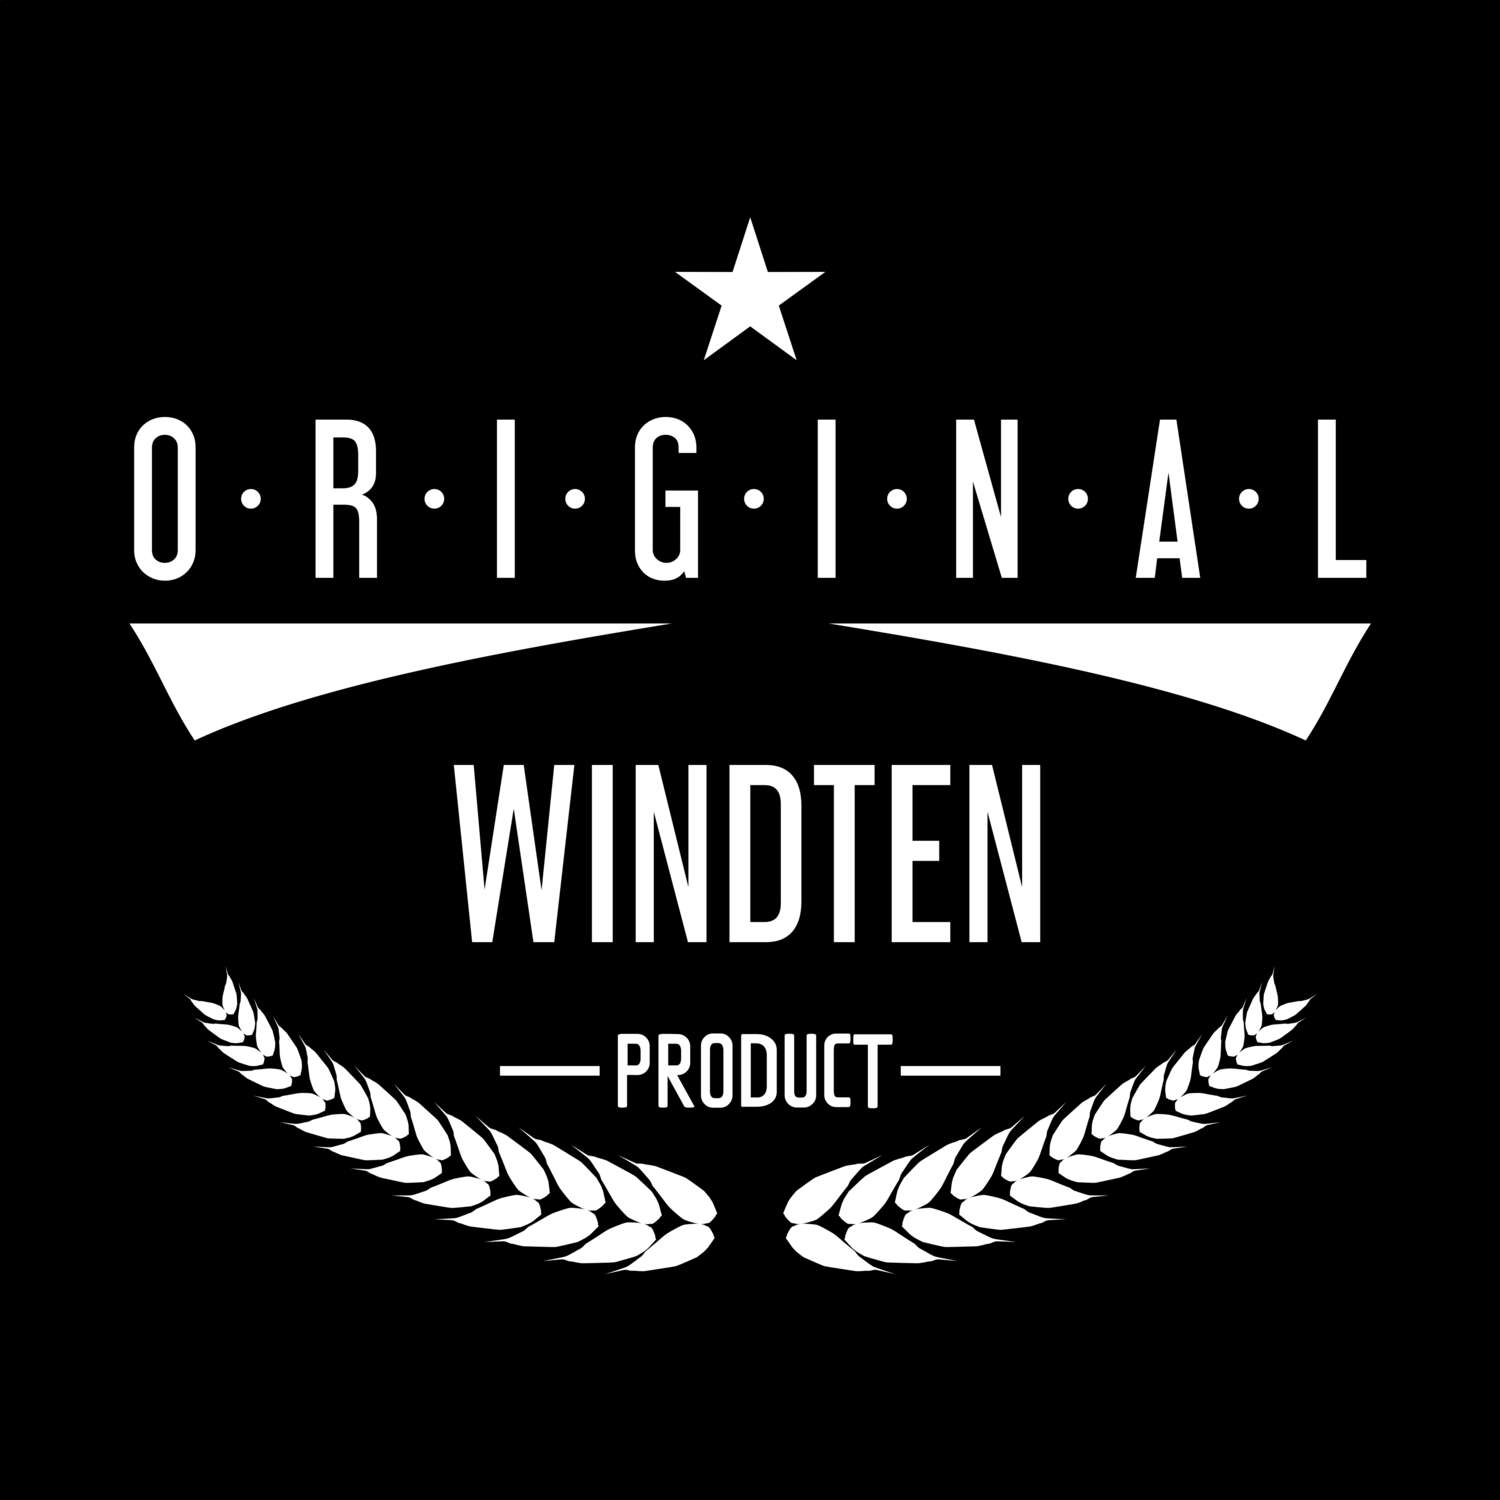 Windten T-Shirt »Original Product«